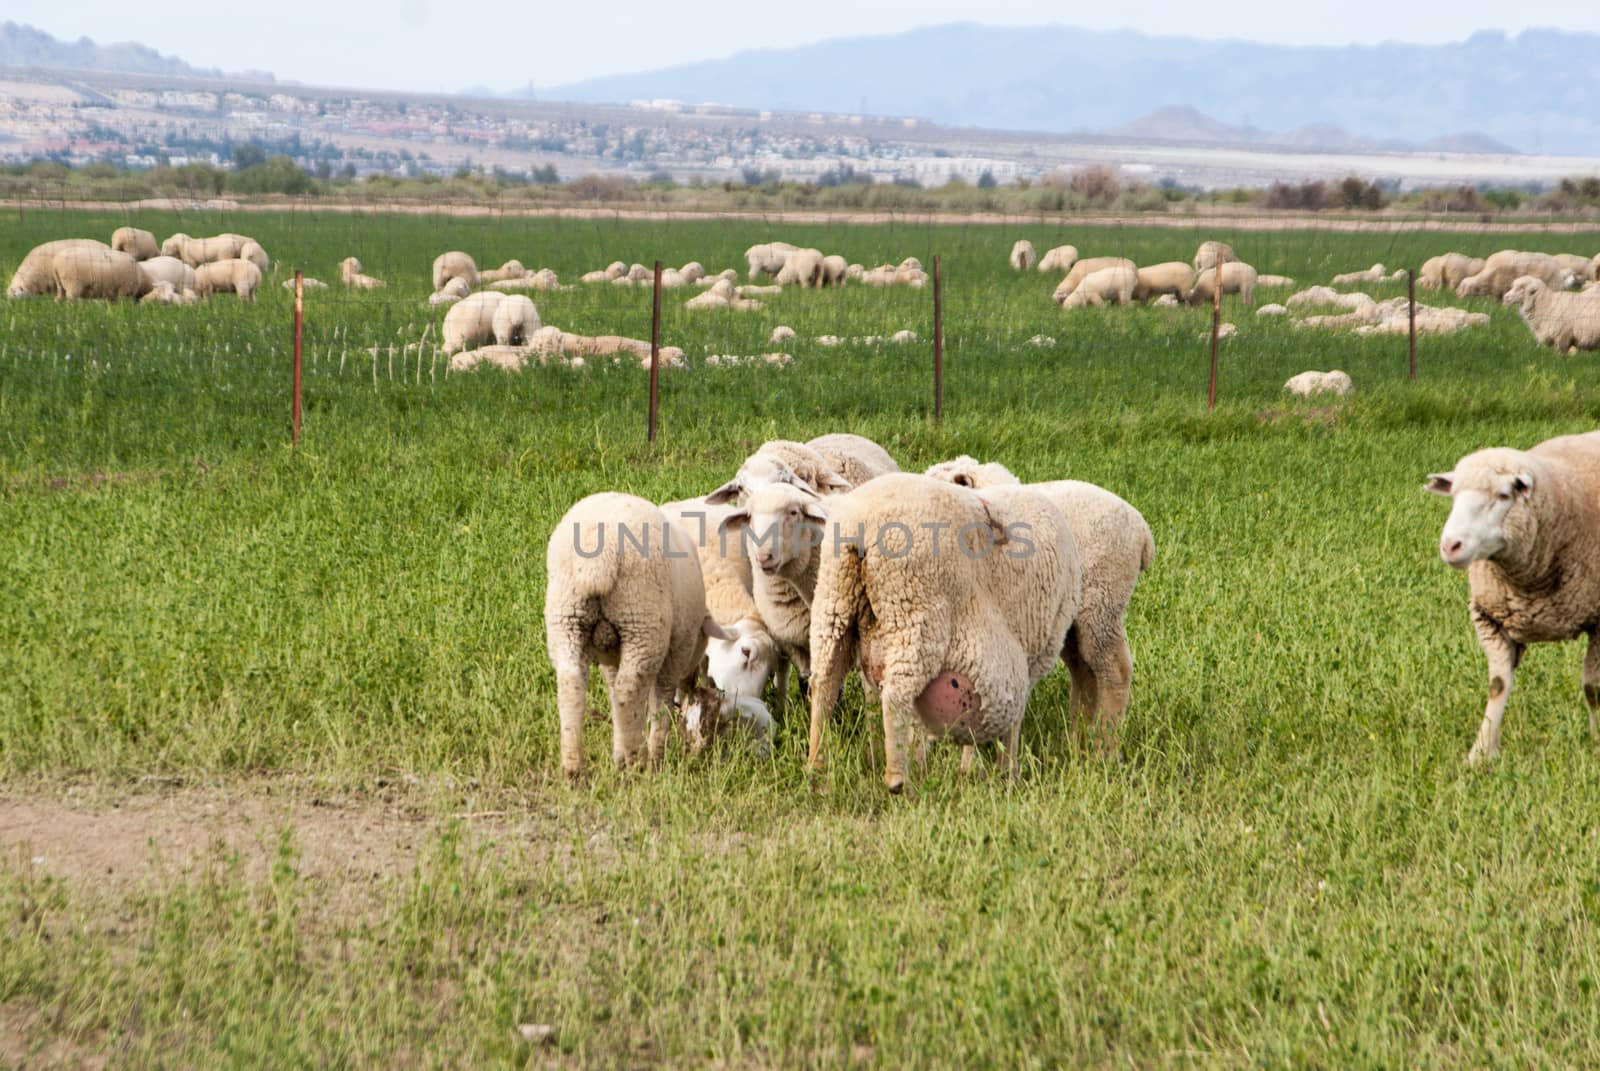 Heavily pregnant sheep by emattil